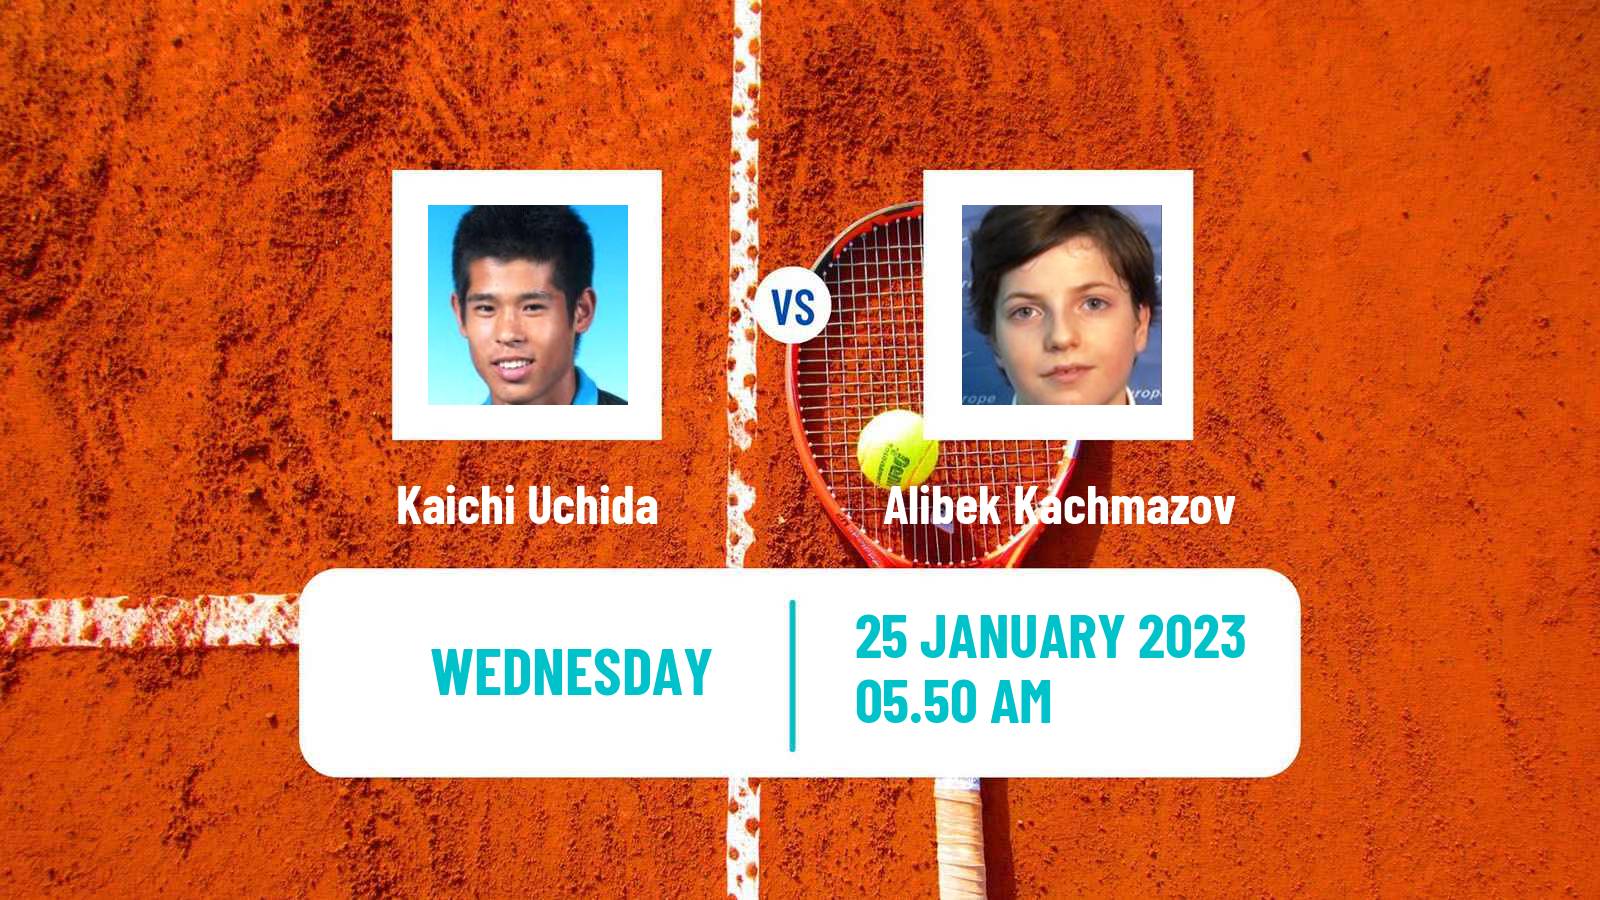 Tennis ATP Challenger Kaichi Uchida - Alibek Kachmazov